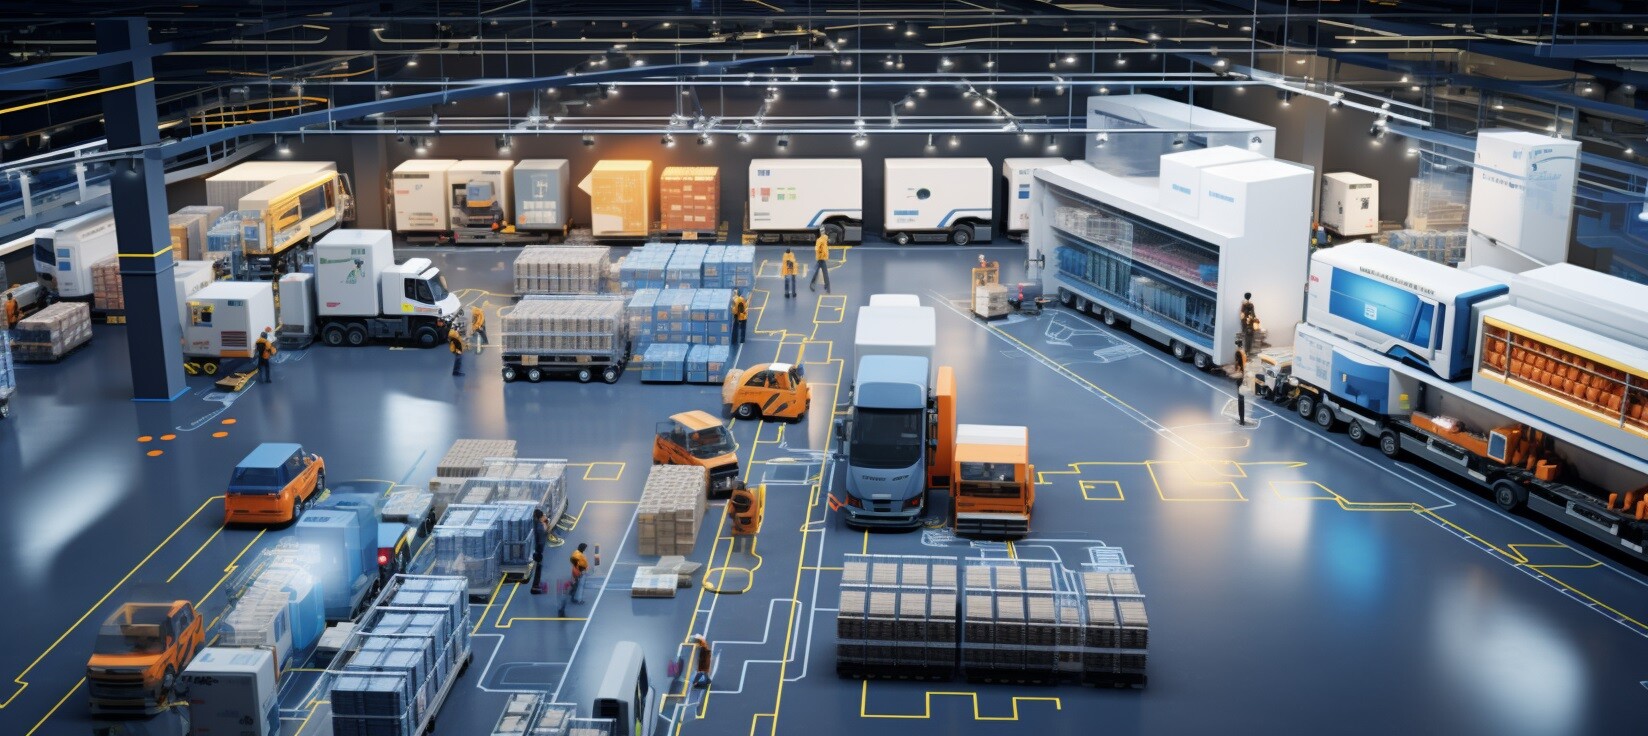 More information about "EY για τεχνητή νοημοσύνη: Πώς αλλάζει τα logistics και την εφοδιαστική αλυσίδα"